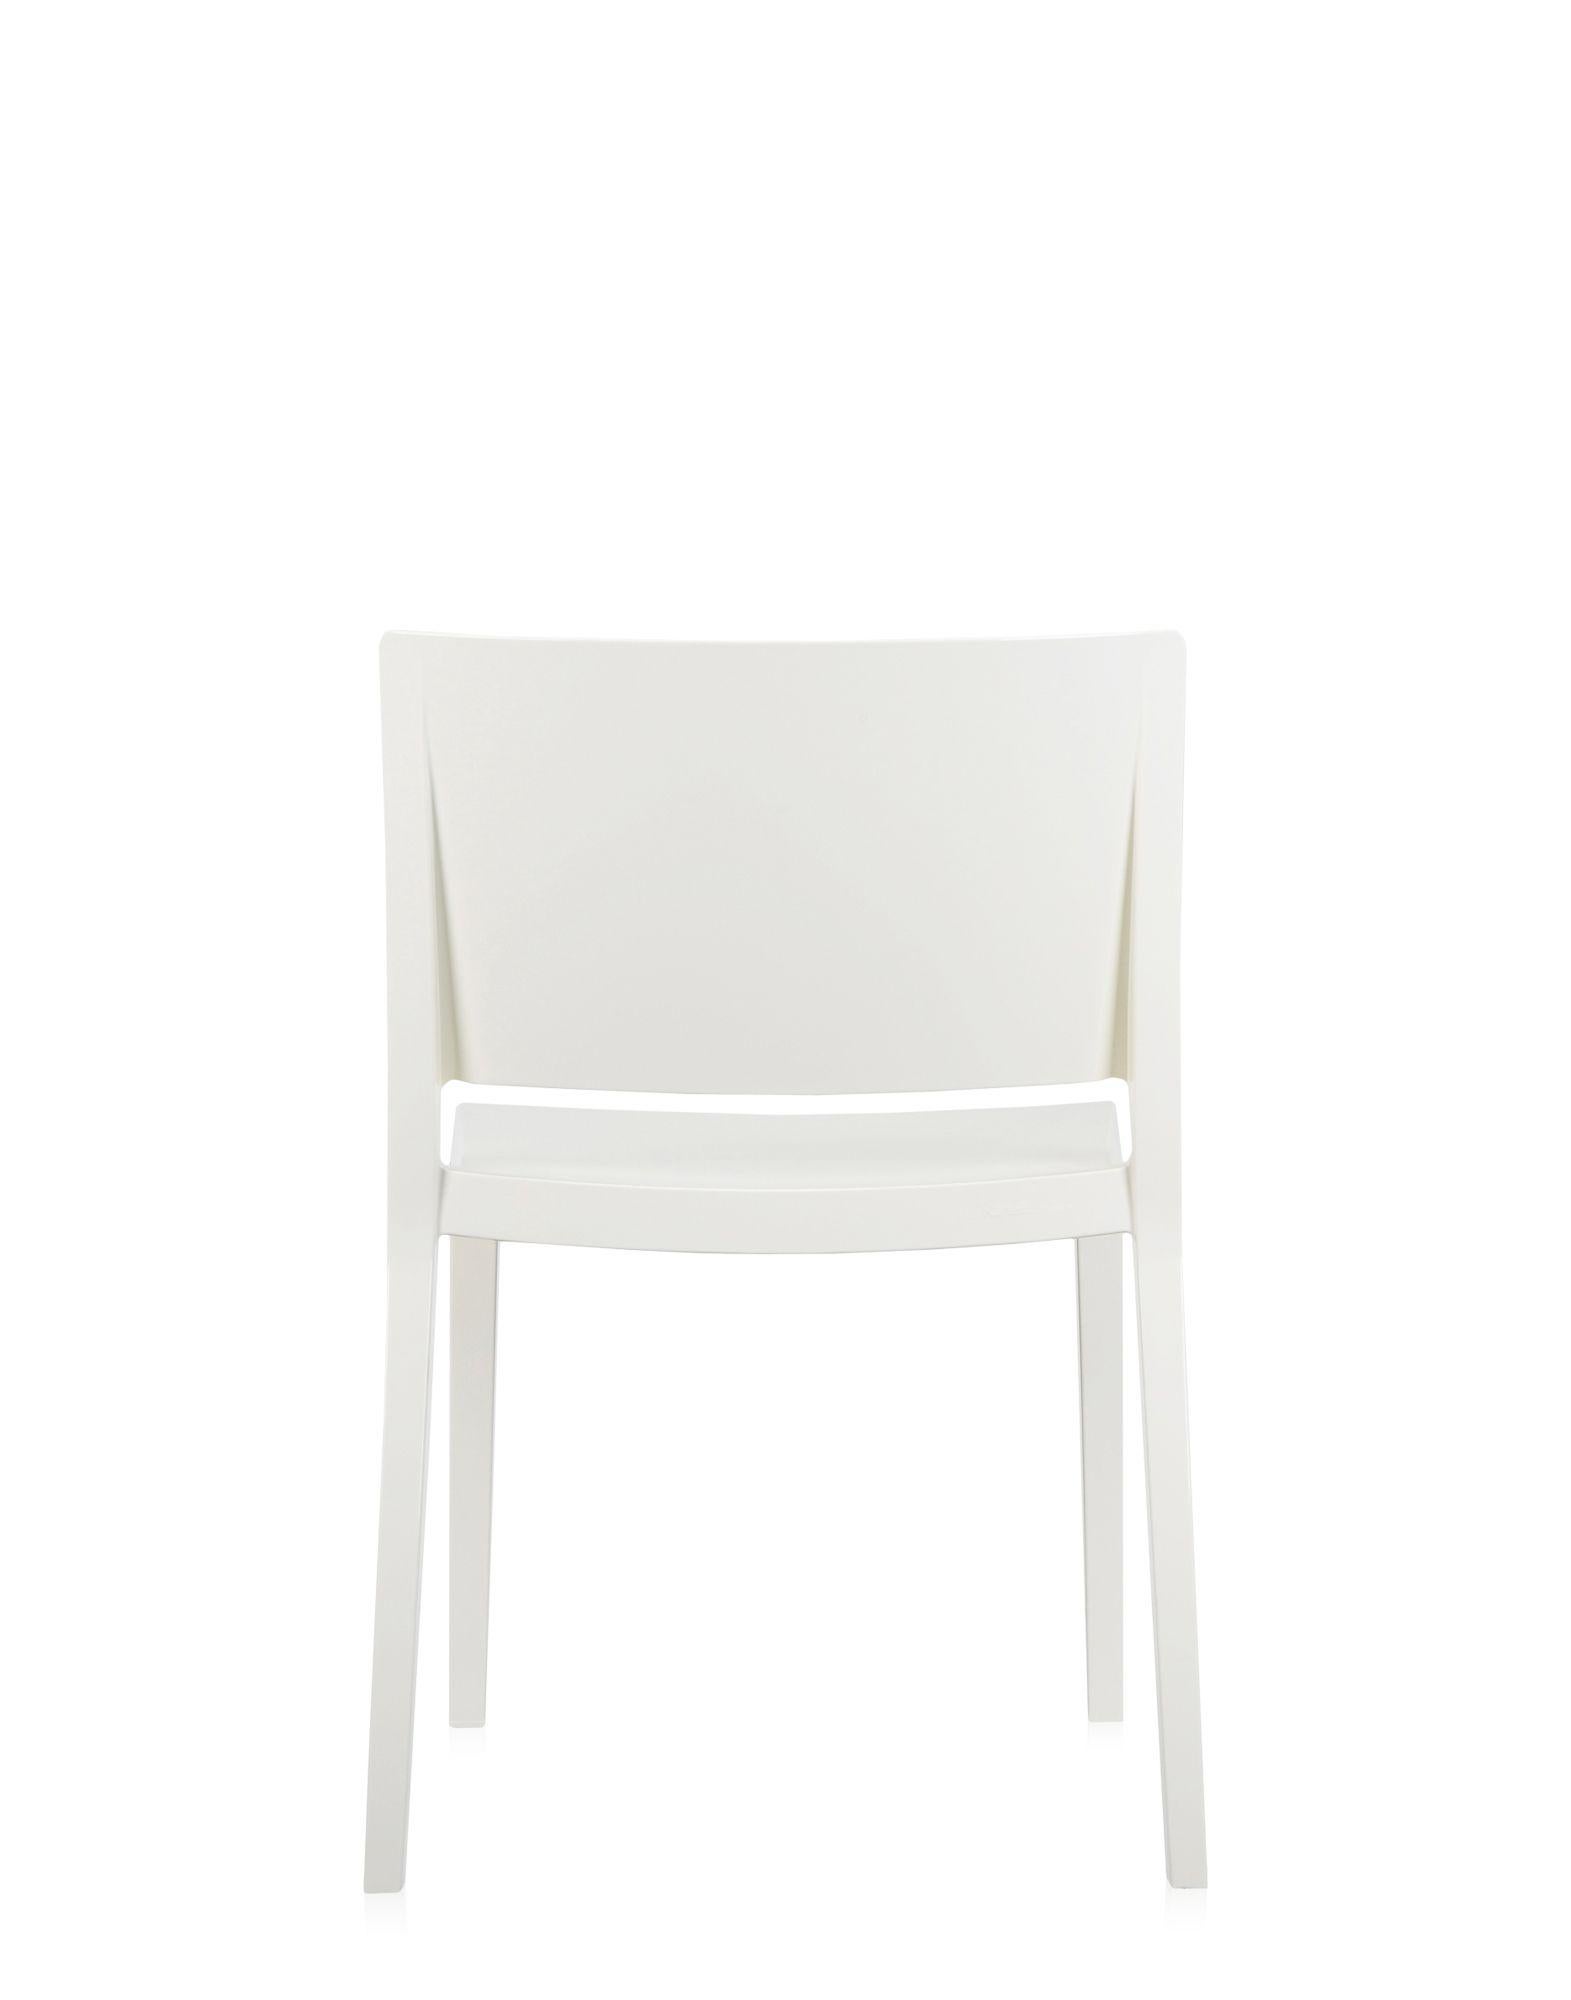 Italian Set of 2 Kartell Lizz Chairs in White by Piero Lissoni & Carlo Tamborini For Sale